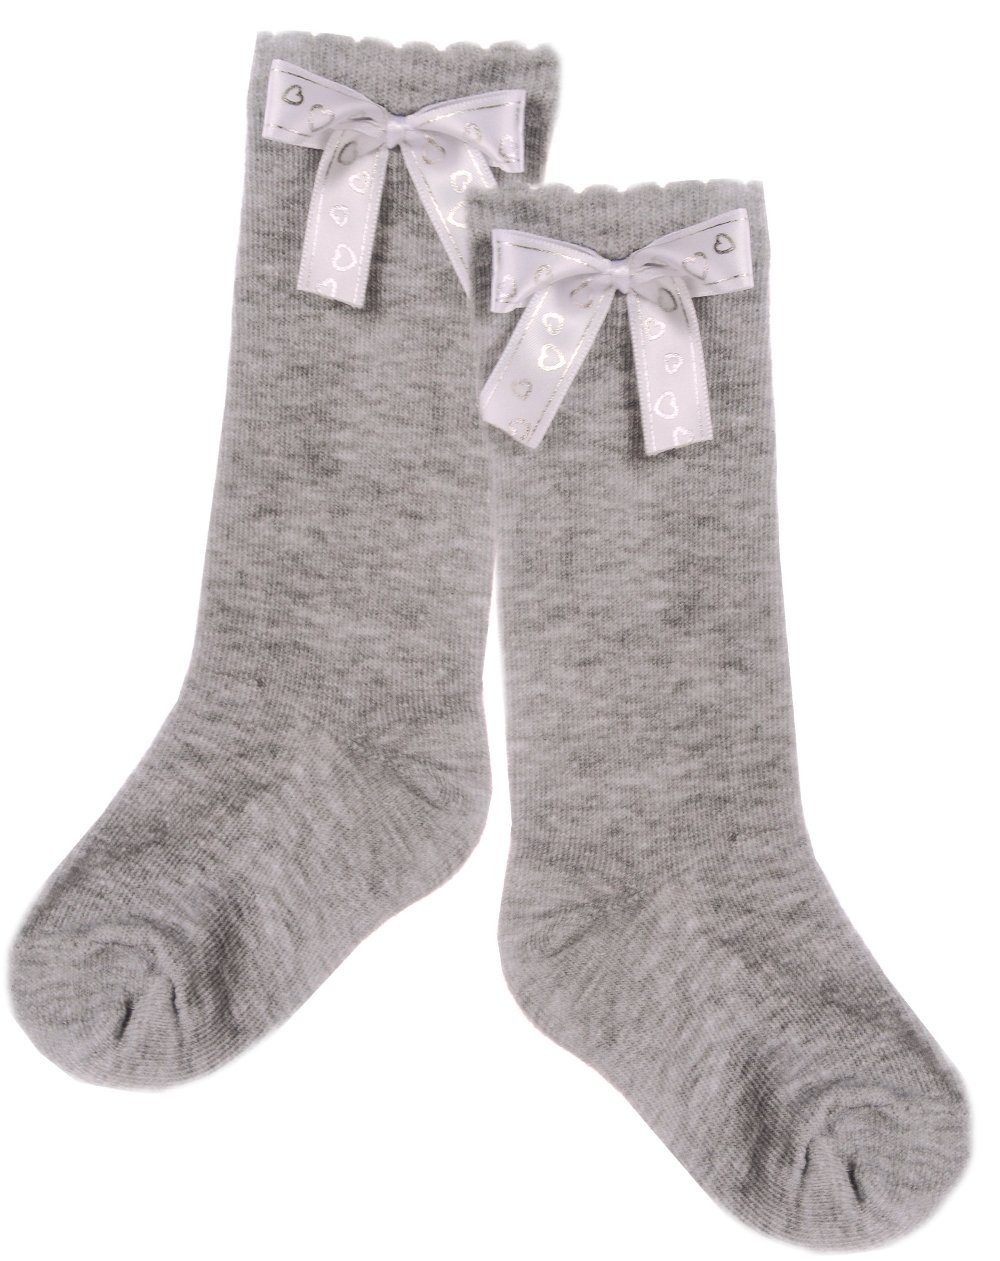 La Bortini Kniestrümpfe Kniestrümpfe in Grau Socken für Baby und Kinder Strümpfe festlich